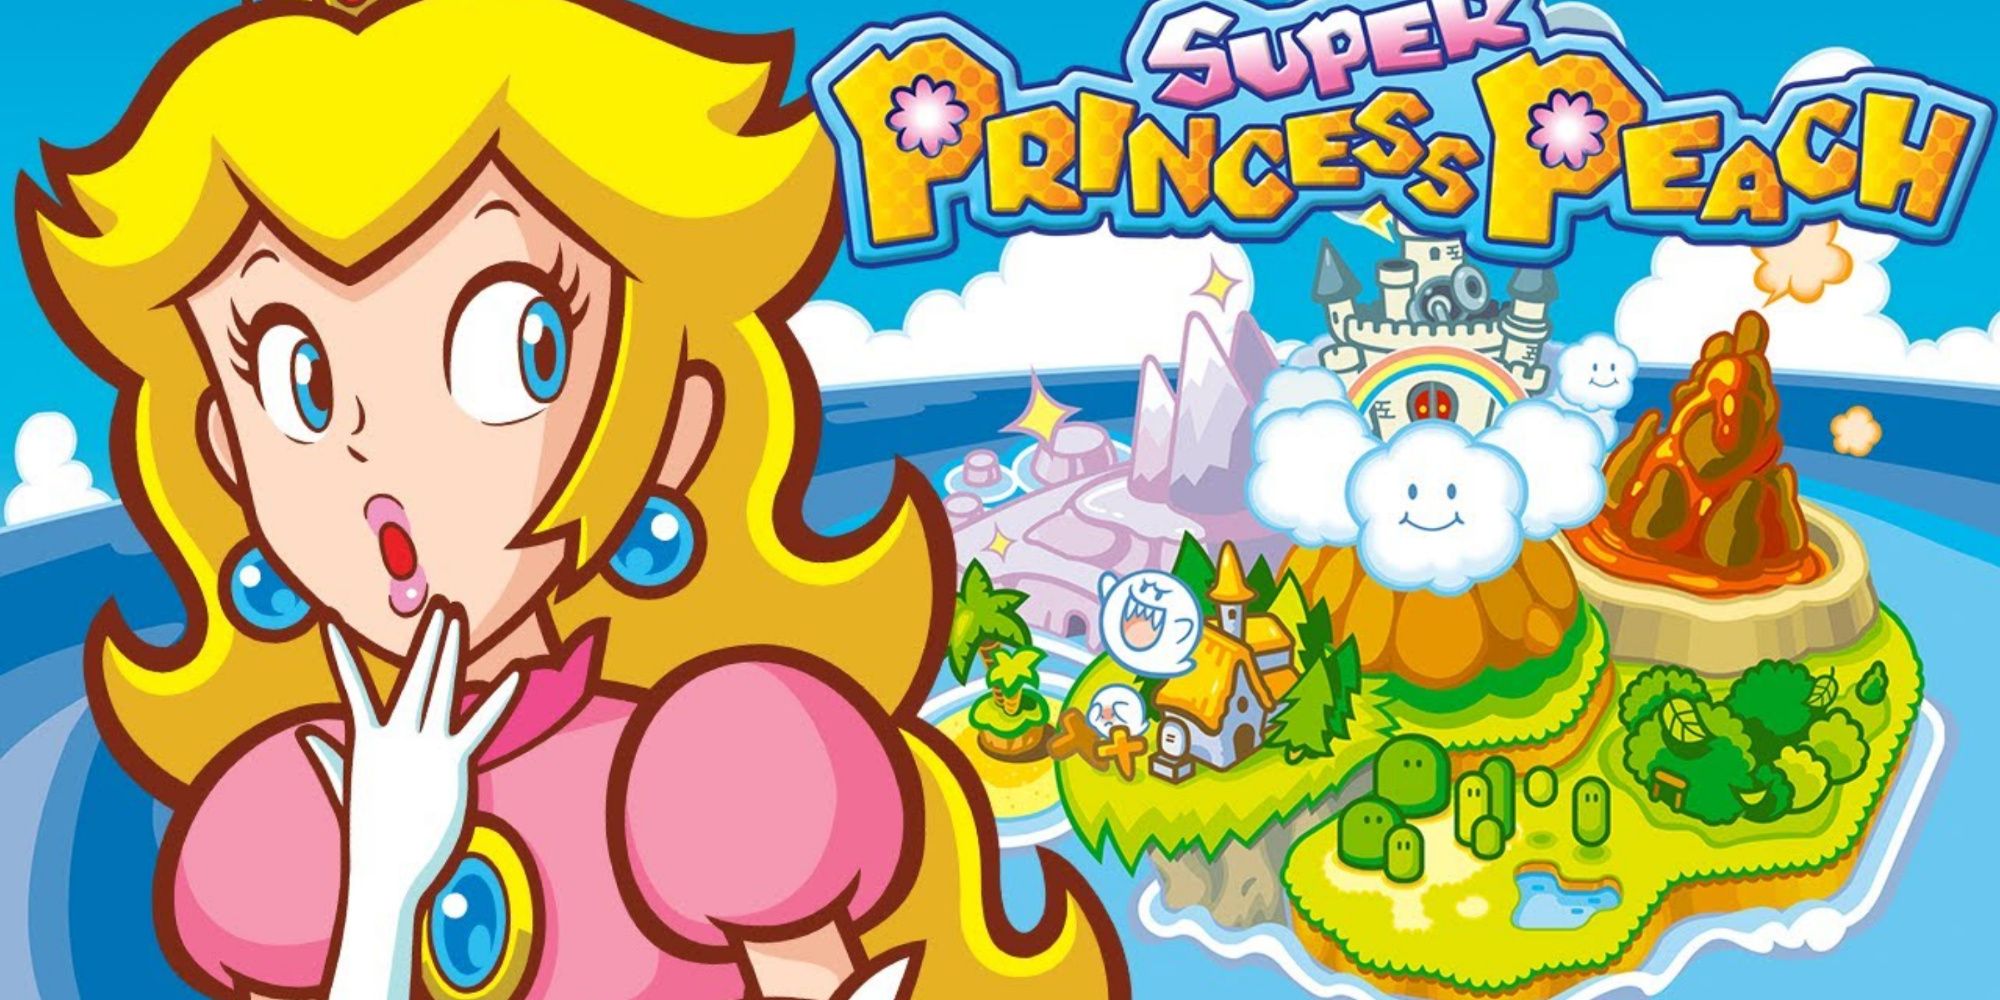 Promo art featuring Peach and the island in Super Princess Peach